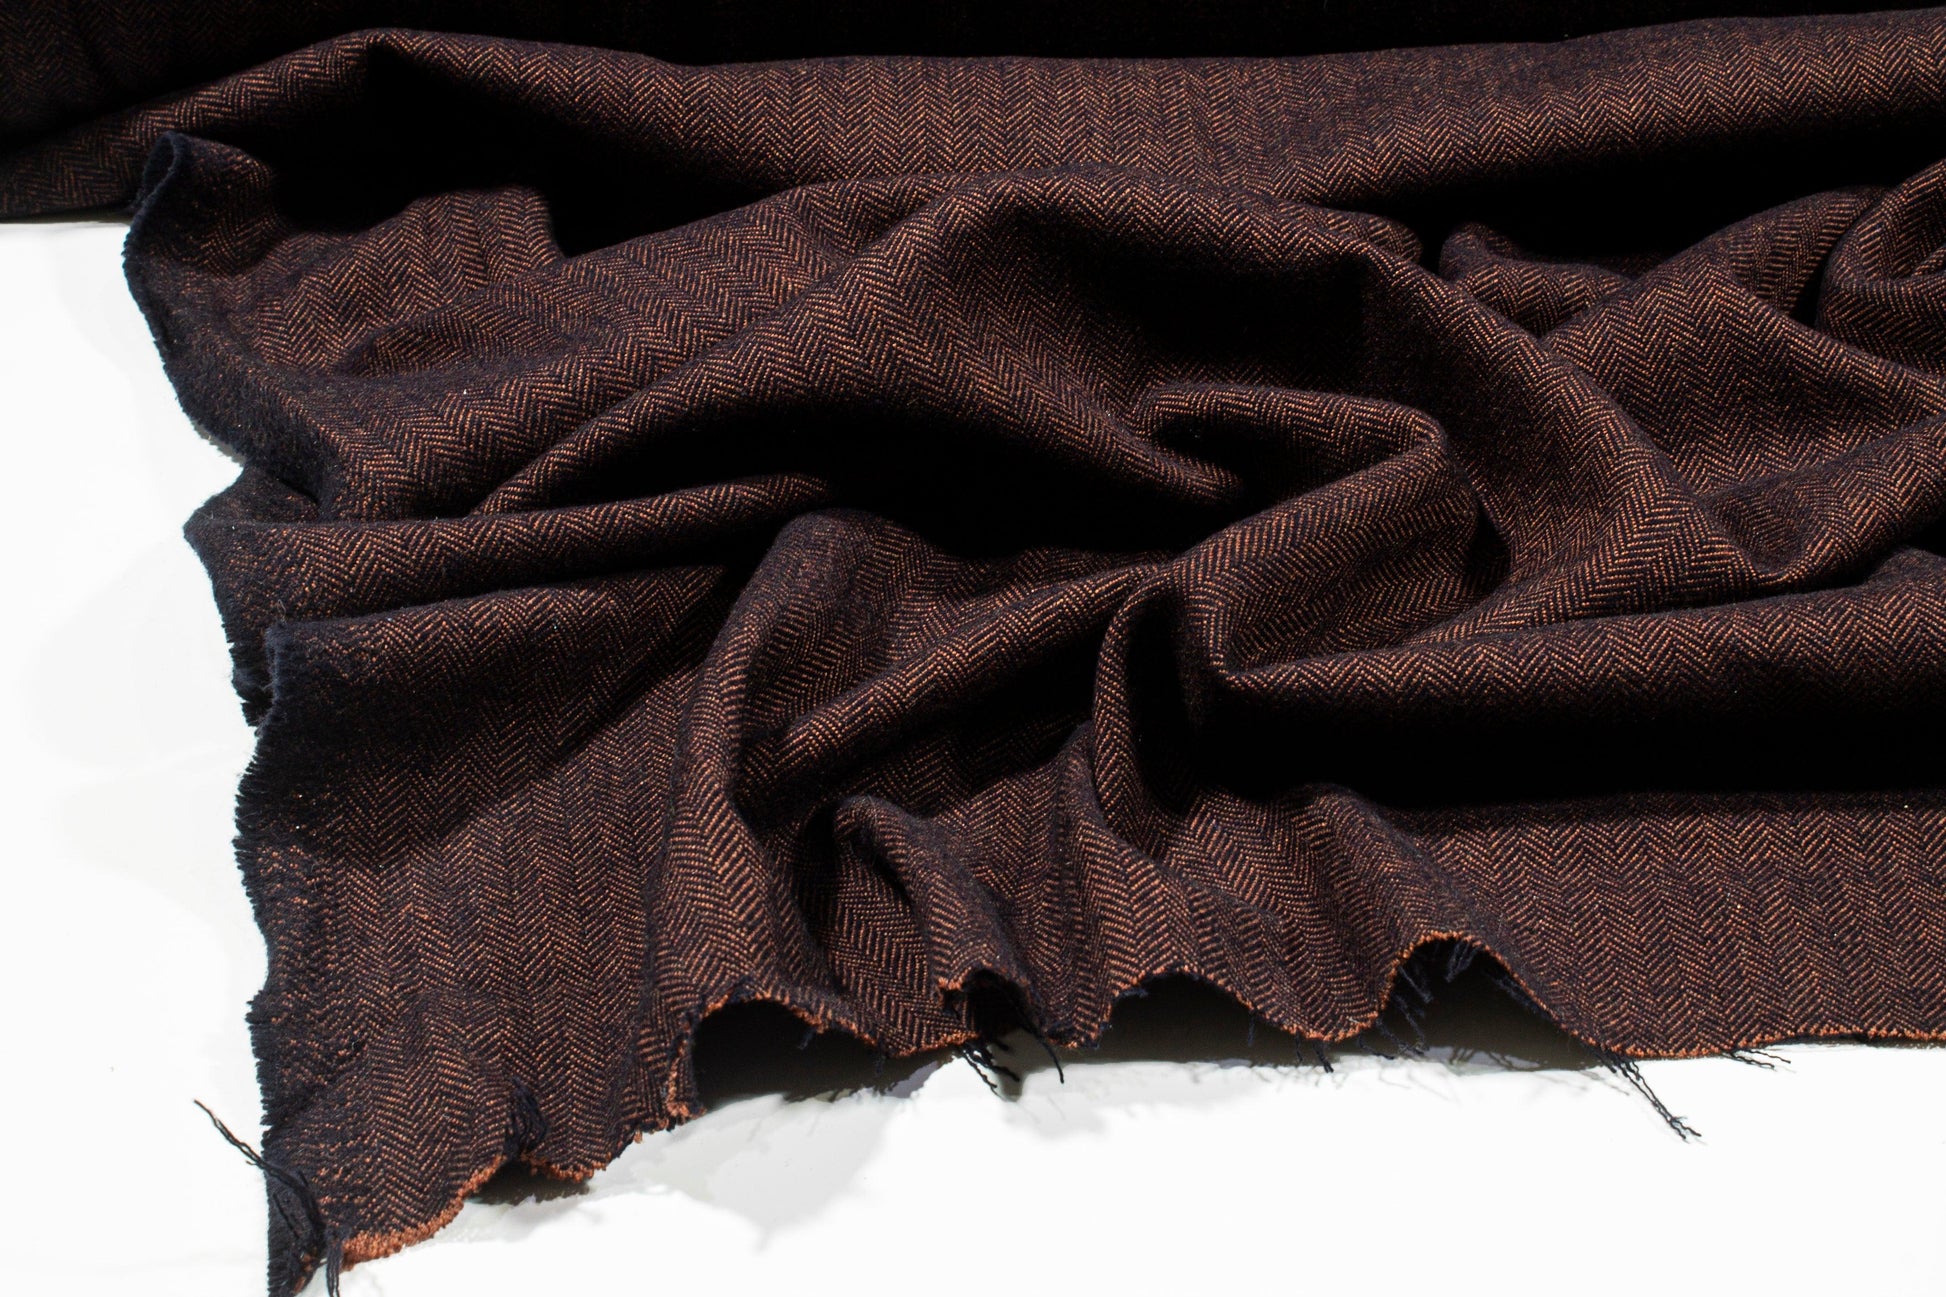 Bronze and Navy Dope Dyed Herringbone Wool Suiting - Prime Fabrics